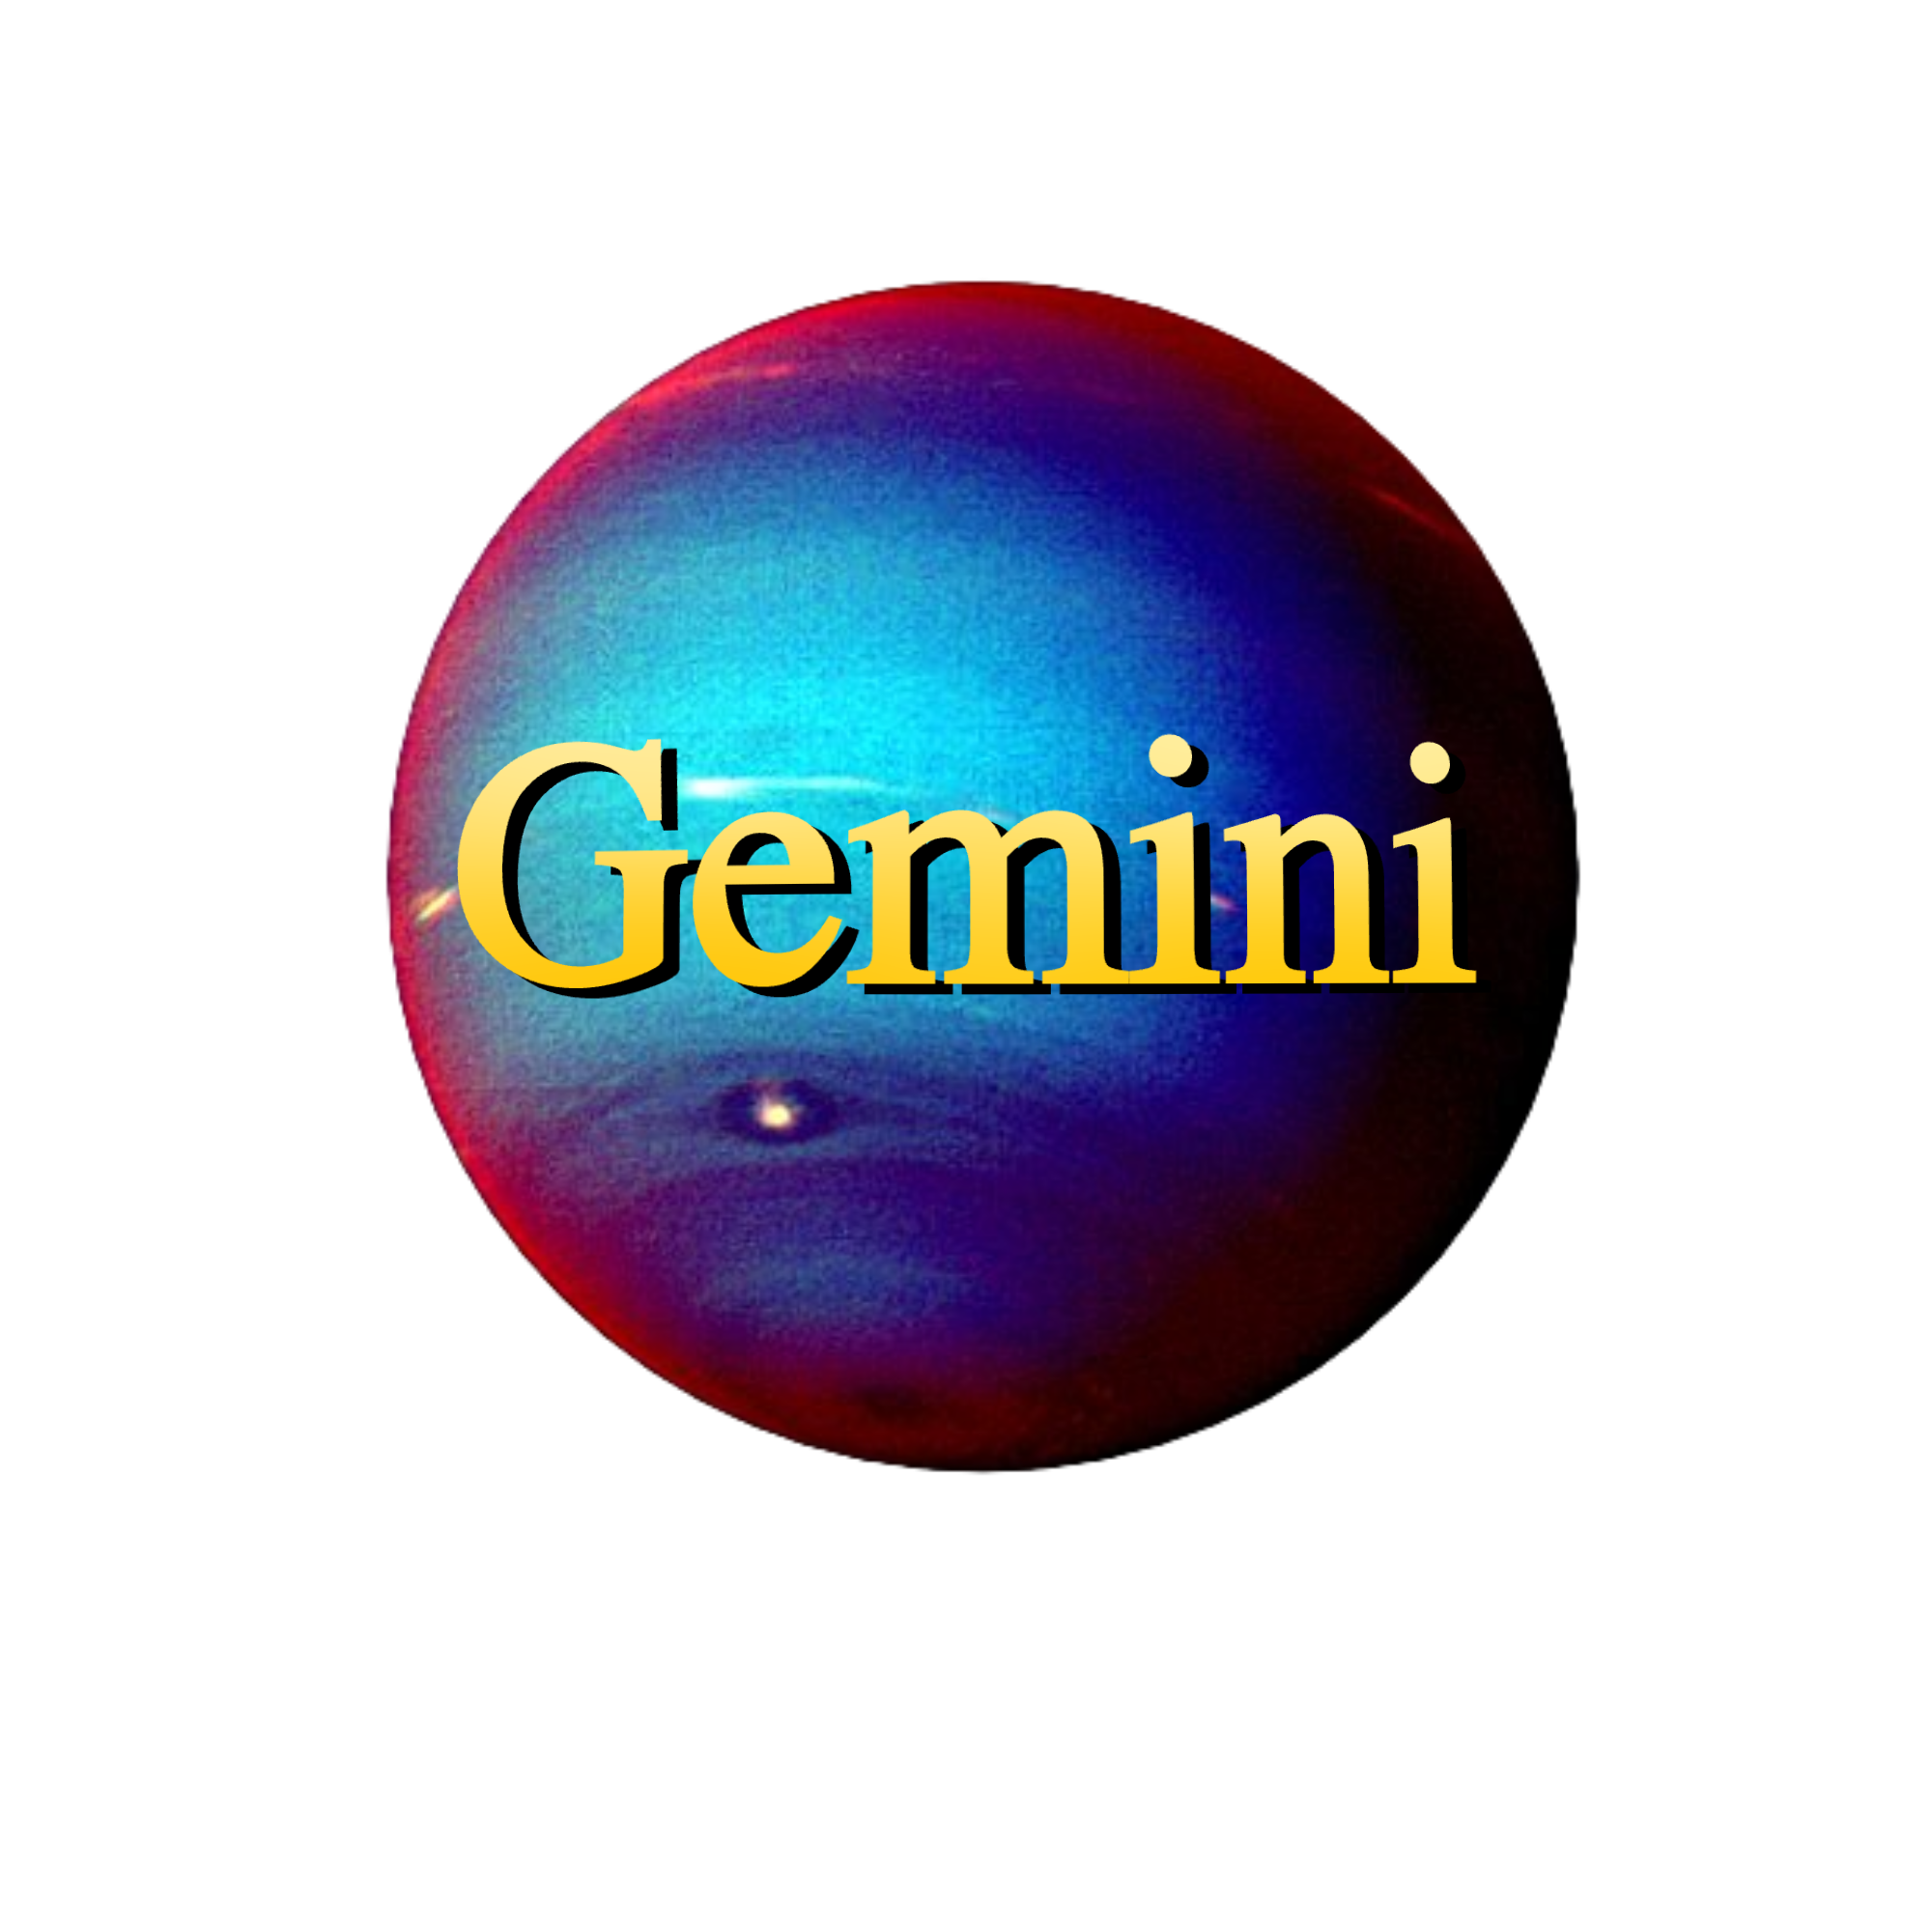 Gemini TV is betting big on reality shows to garner eyeballs